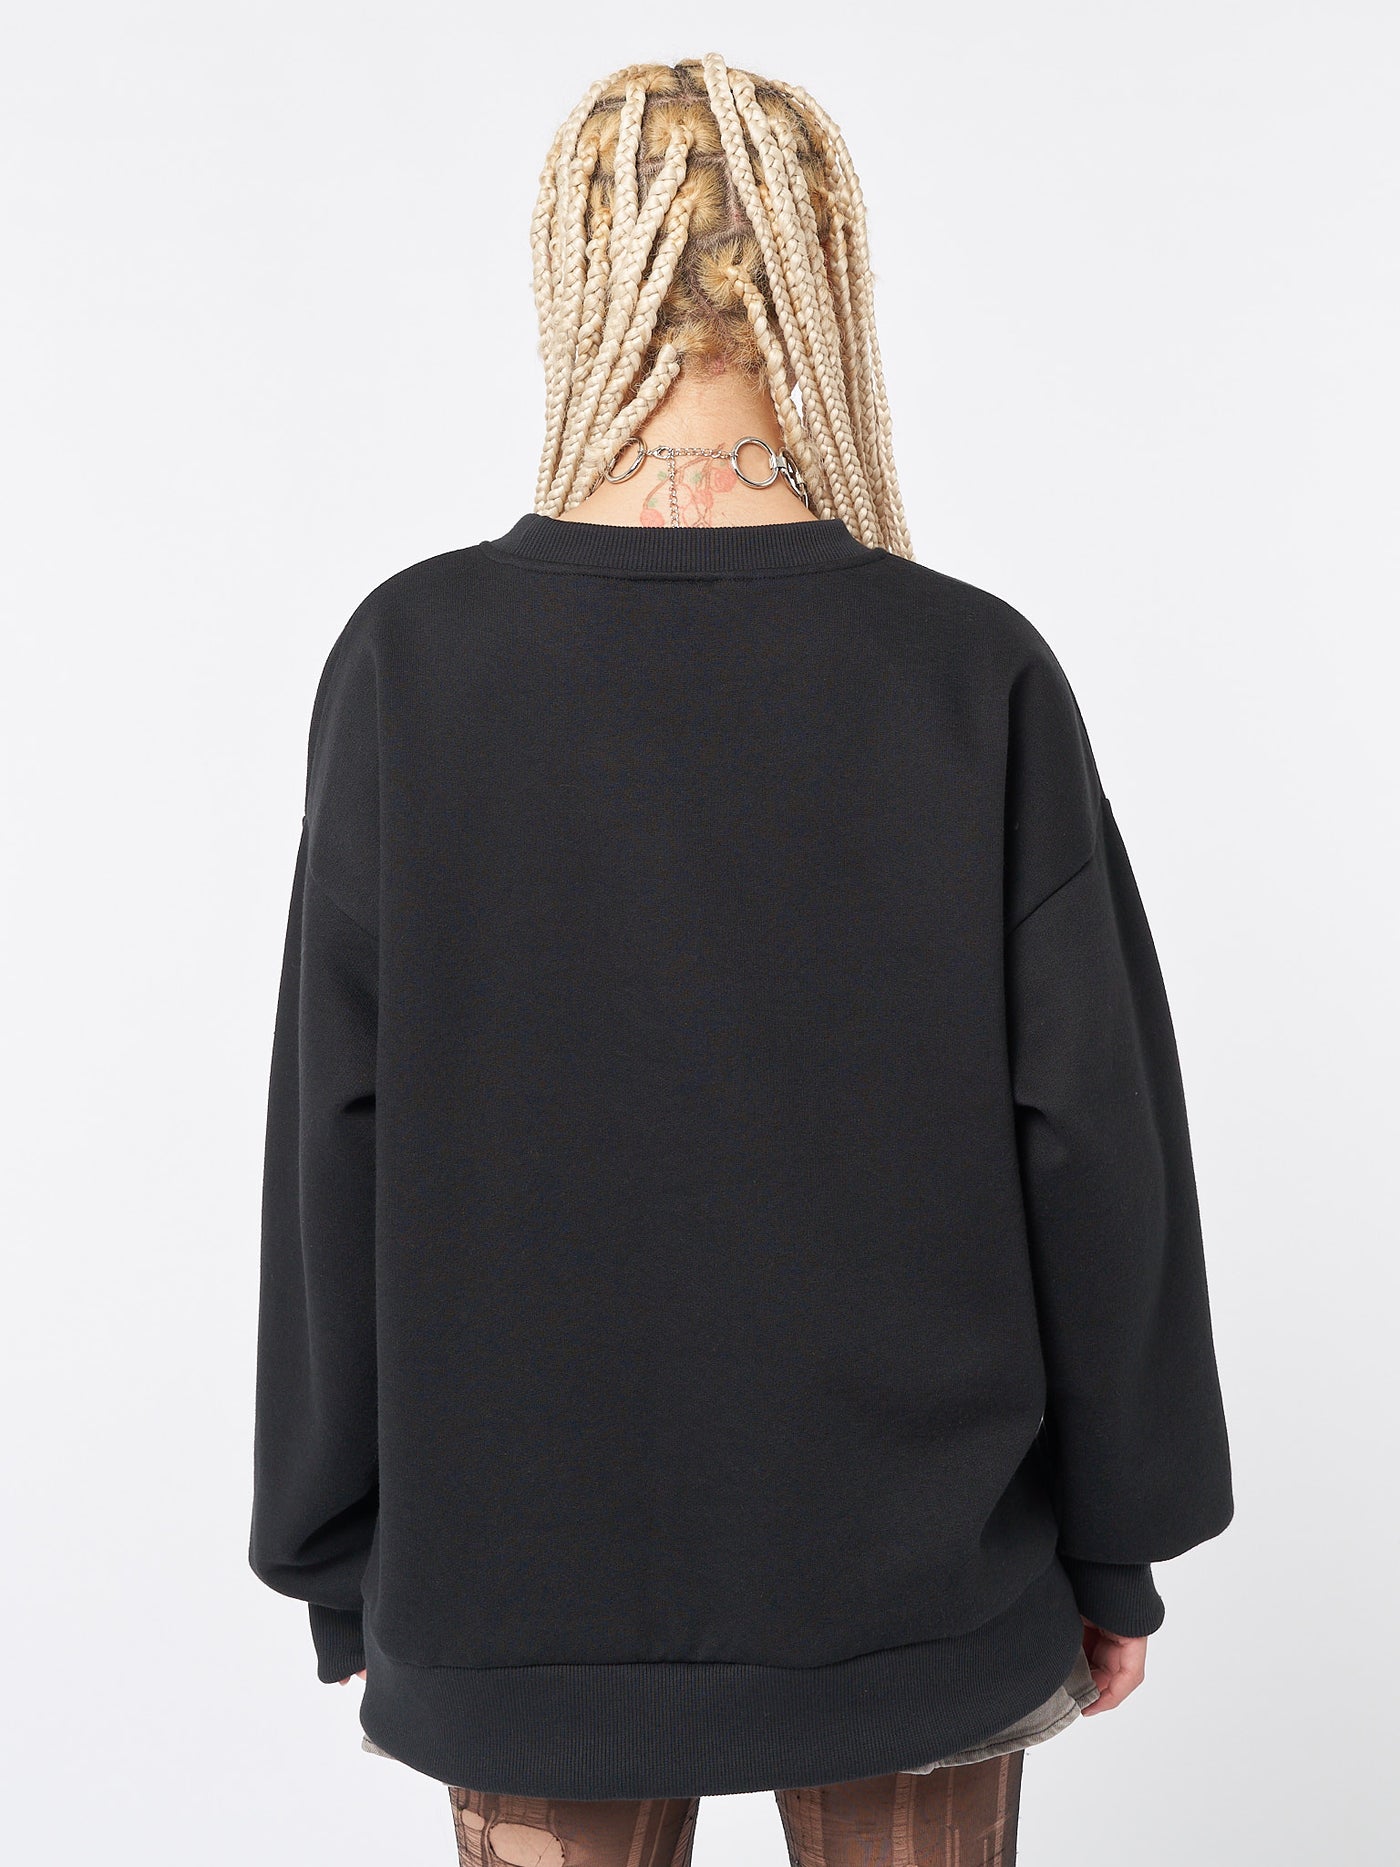 Overthinker Black Lace Up Sweatshirt - Minga London